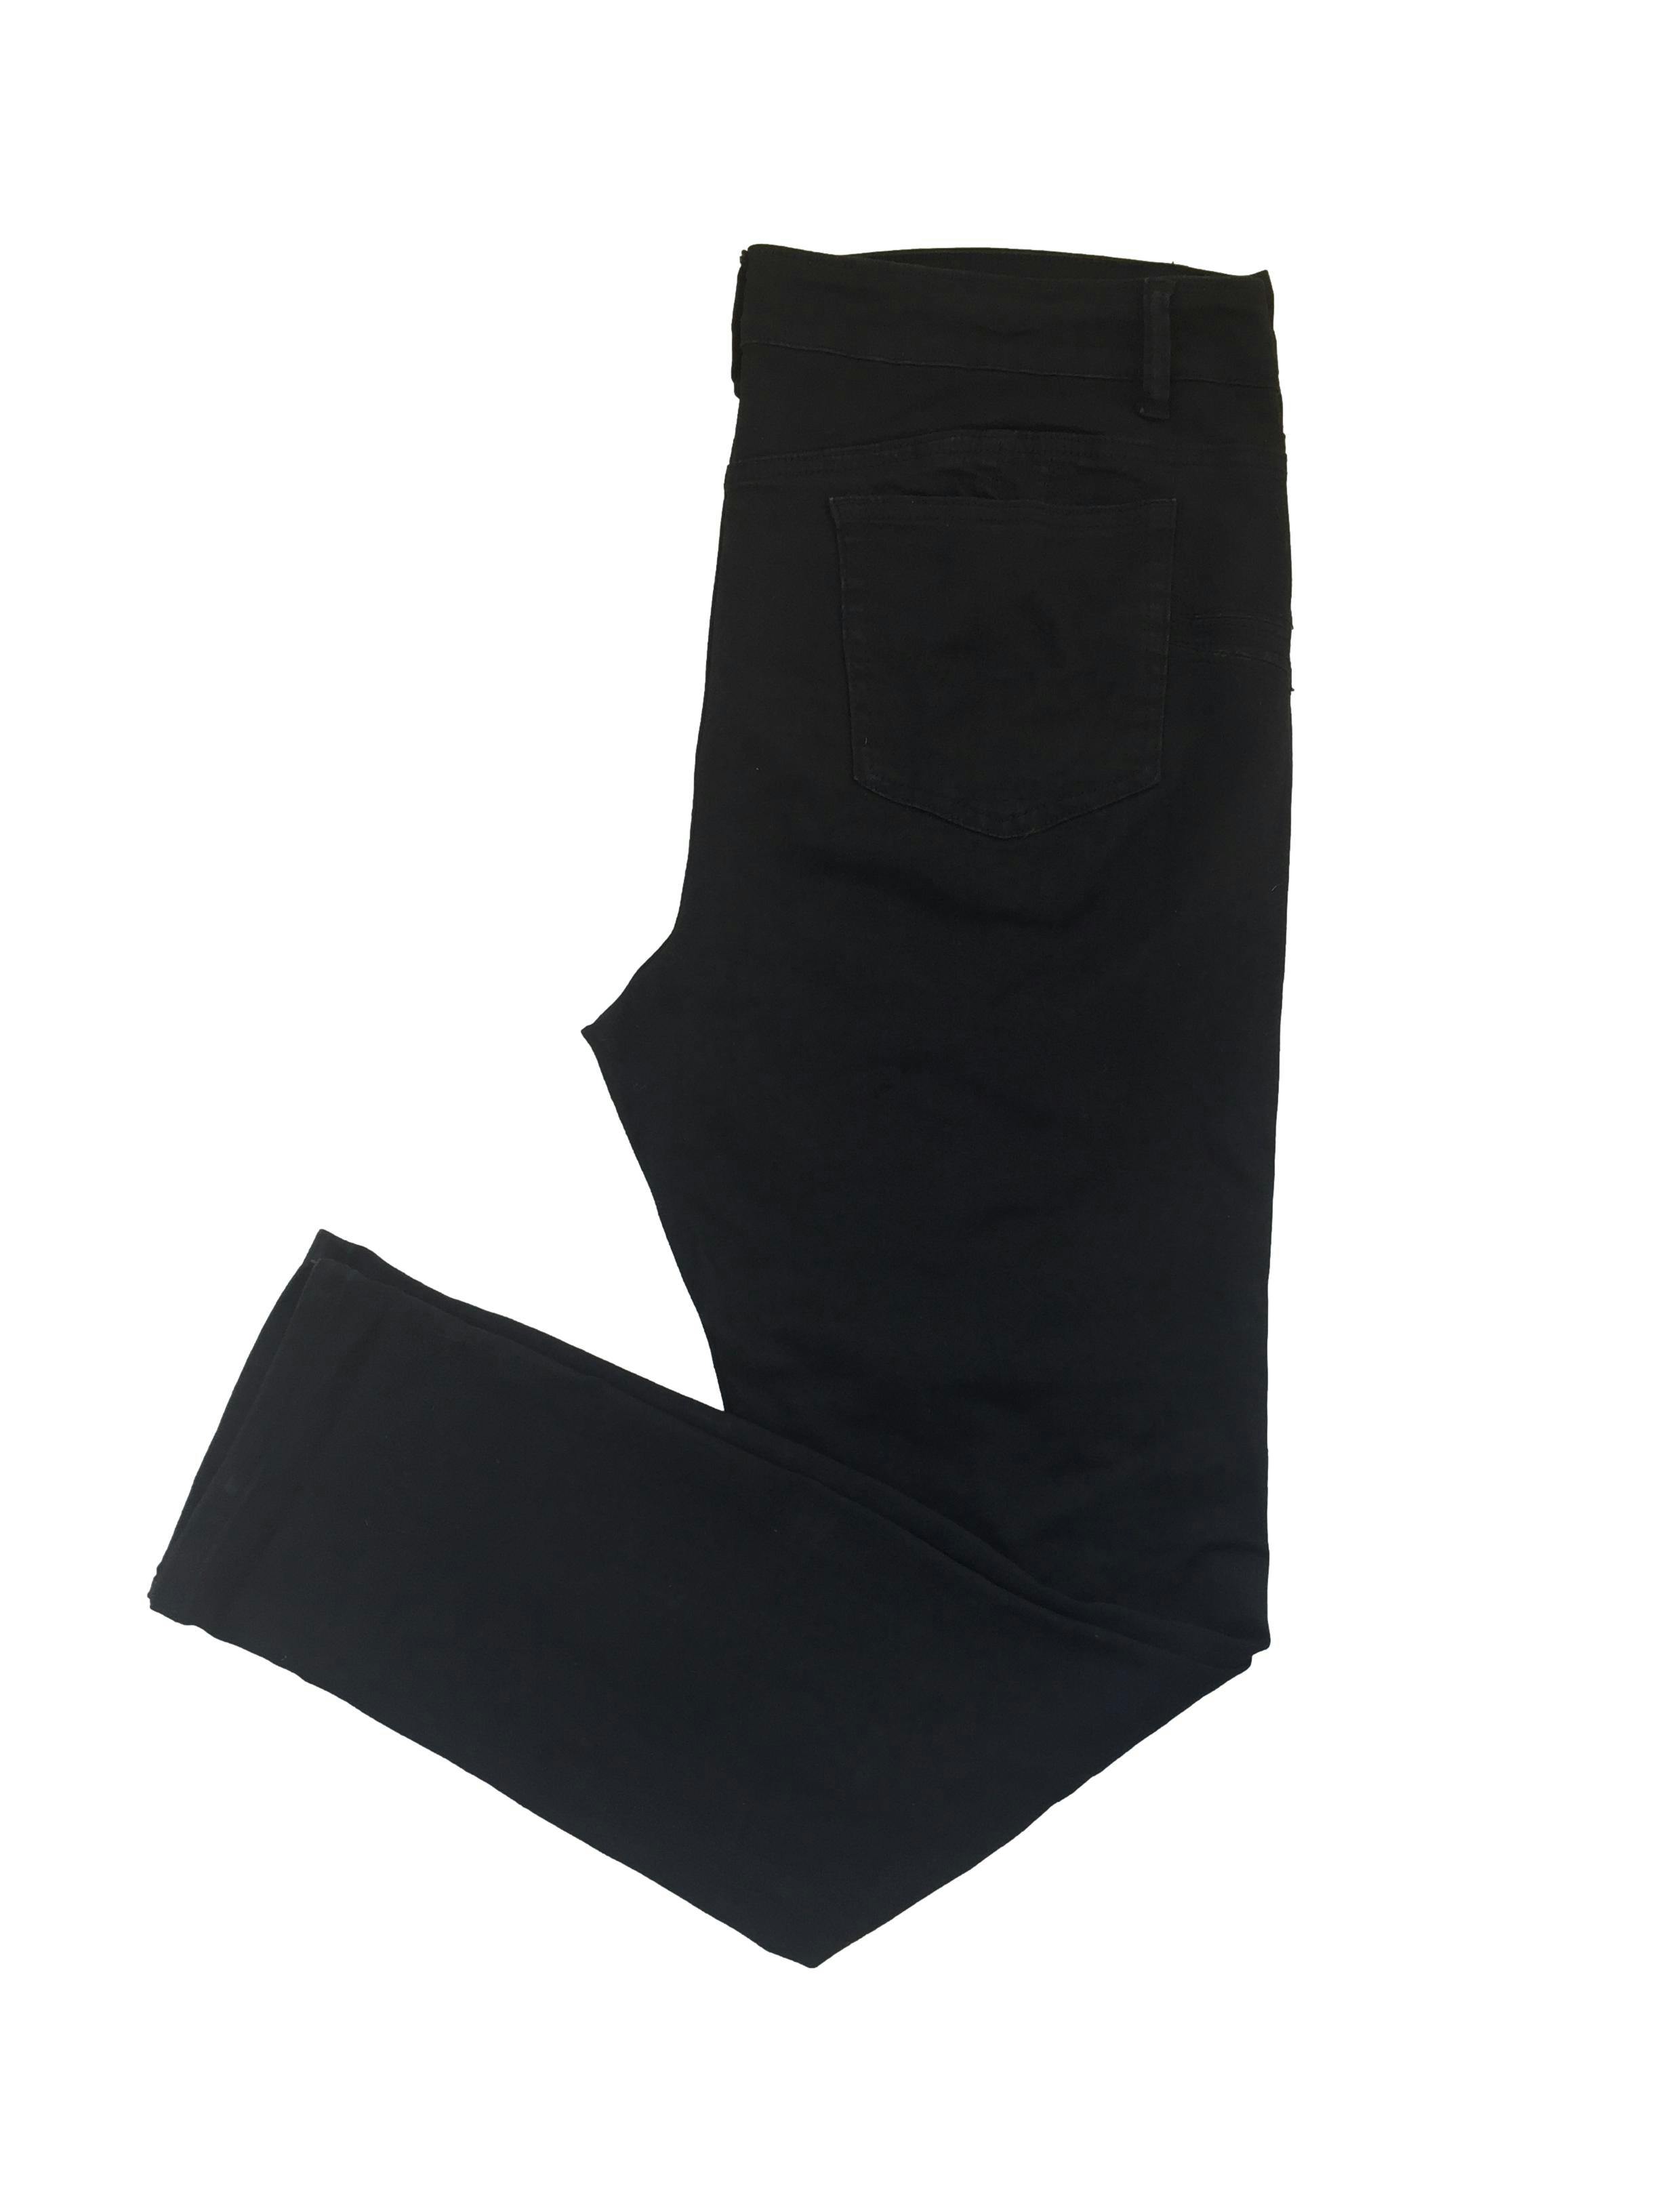 Skinny jean negro con rasgado en piernas, stretch. Cintura 100cm Tiro 30cm Largo 110cm